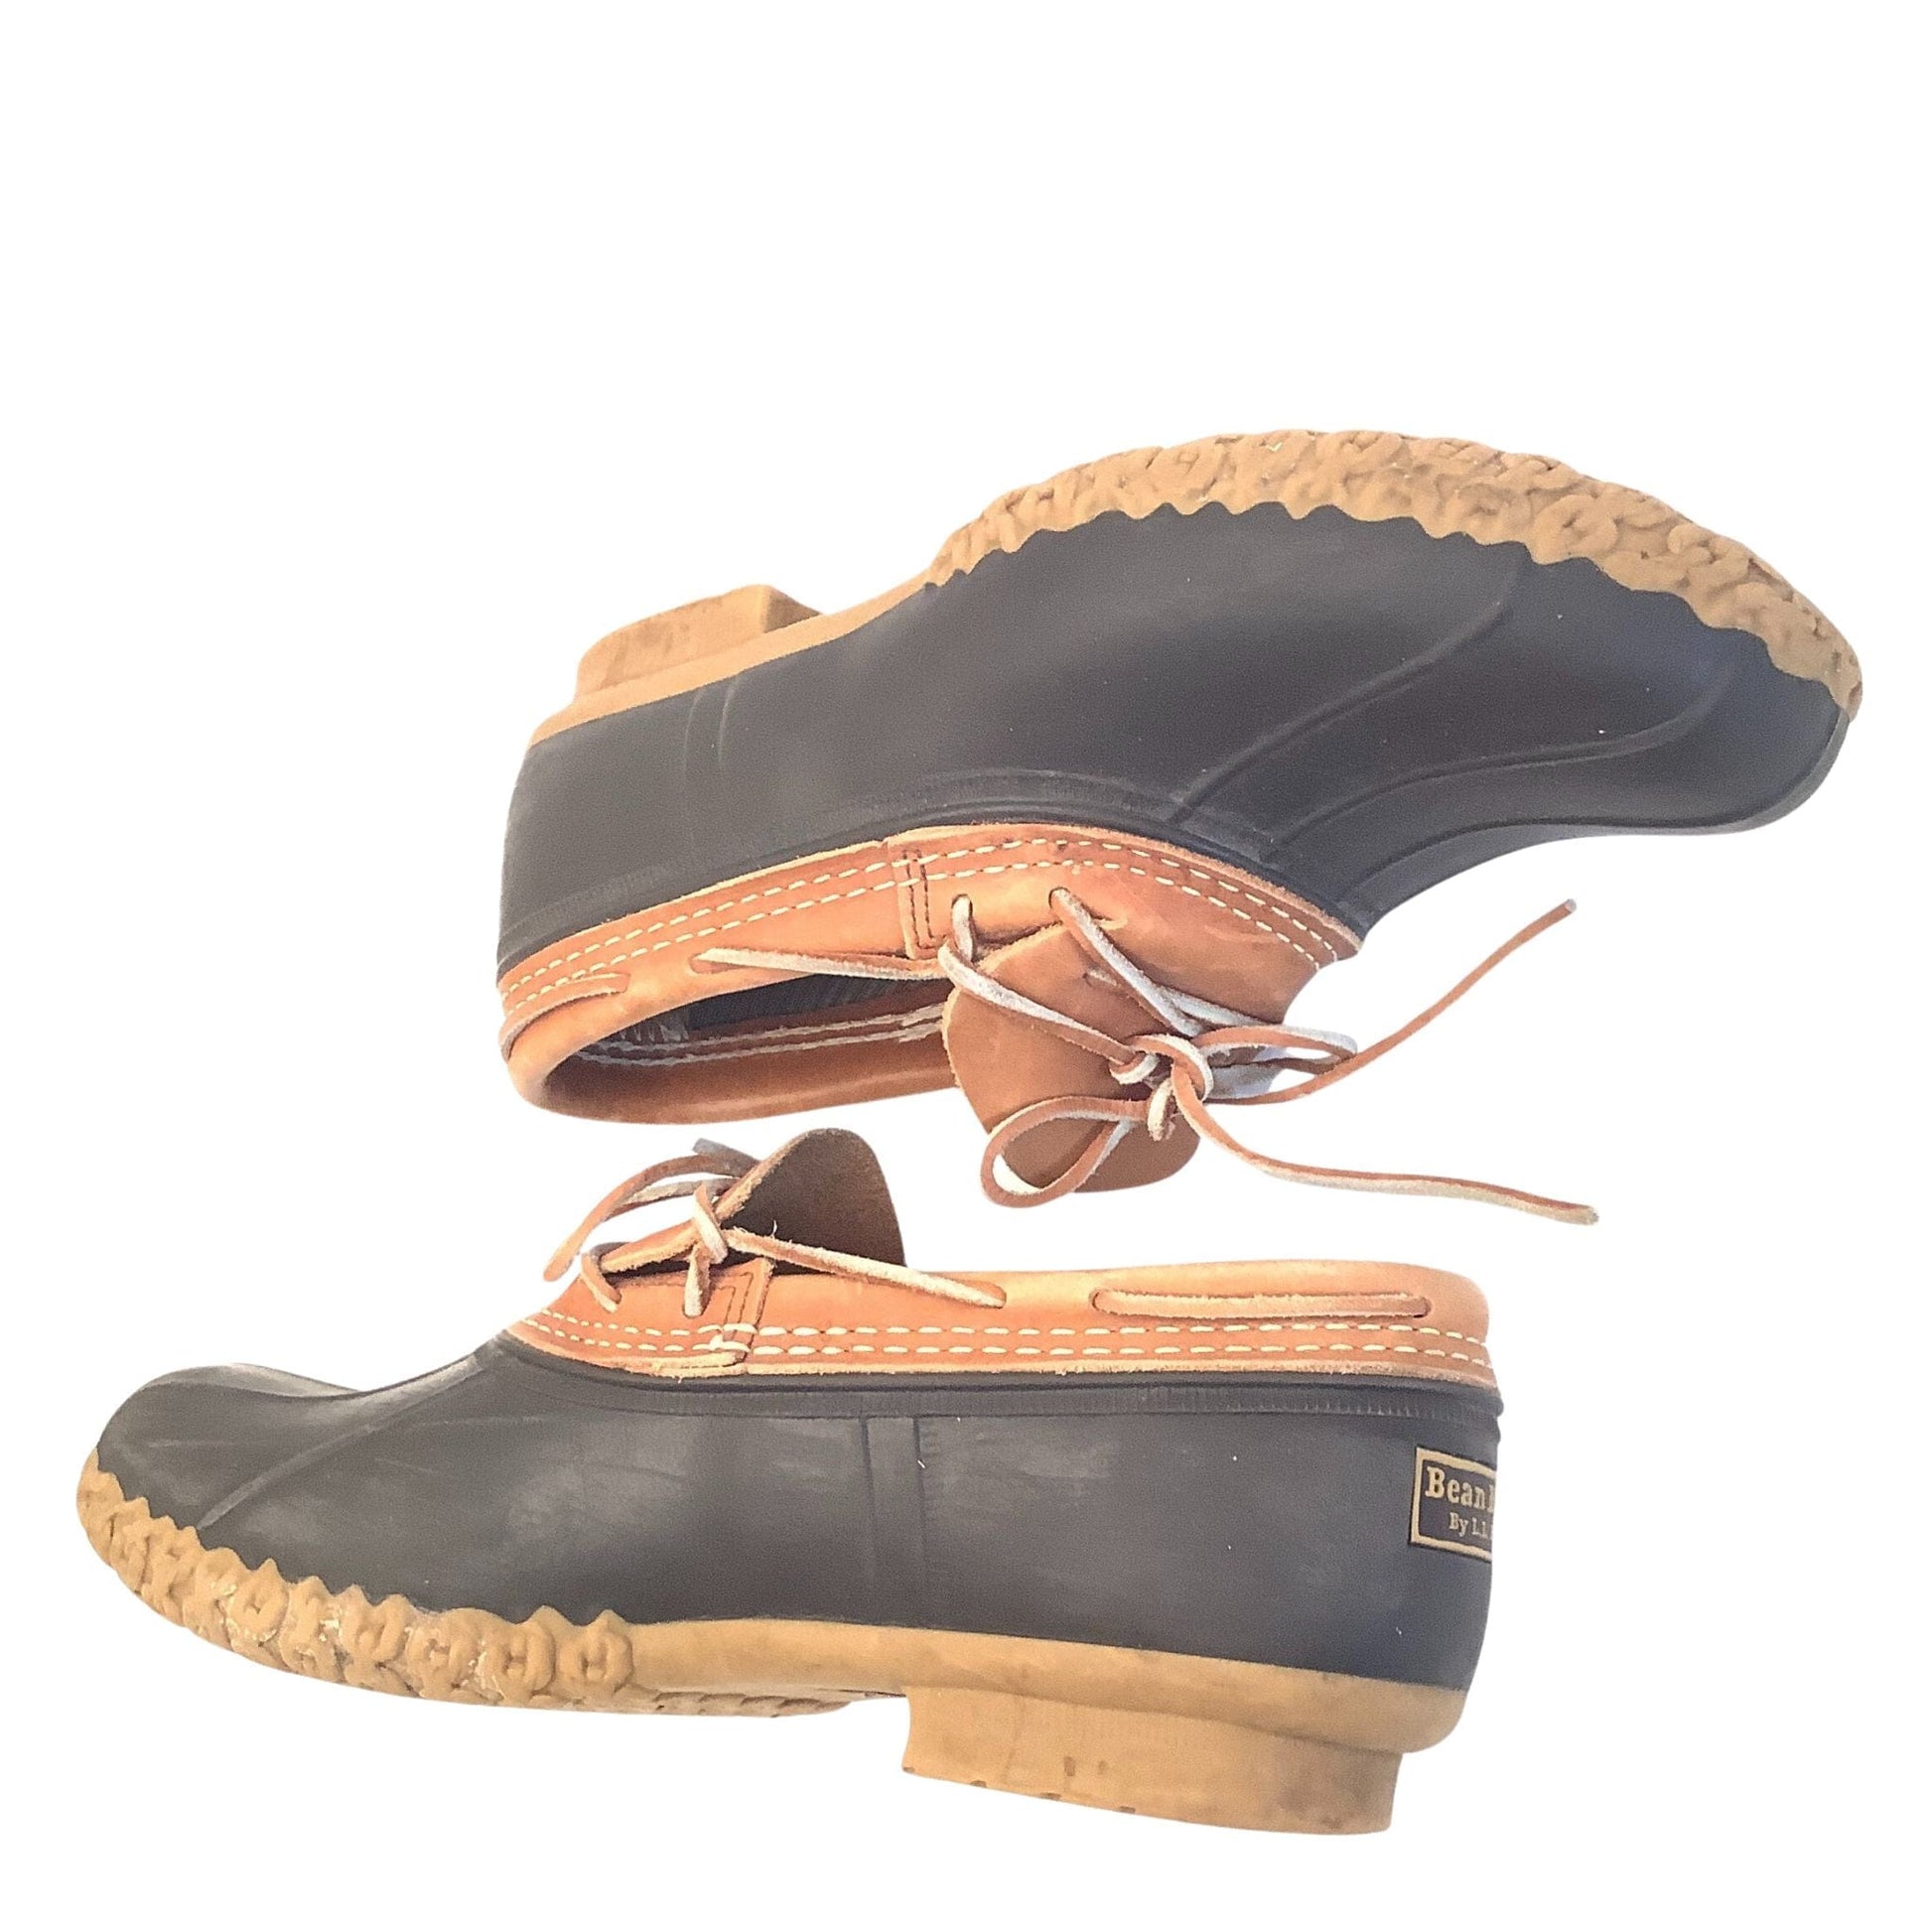 Portland USA Rubber Shoes 9 / Brown / Vintage 1990s